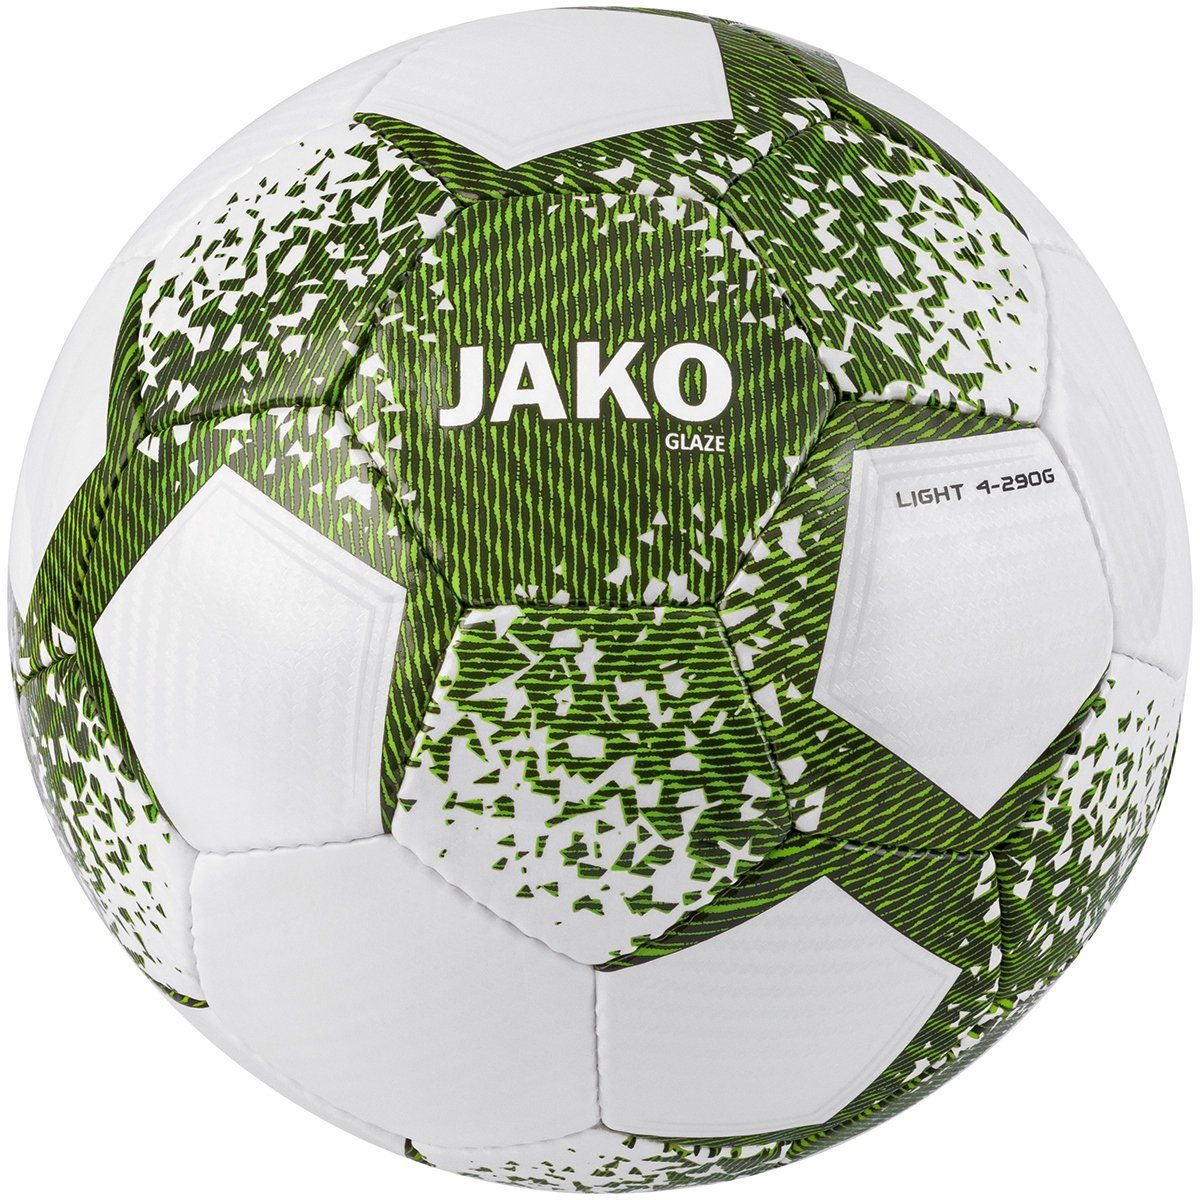 Jako weiß/khaki/neongrün-290g Fußball